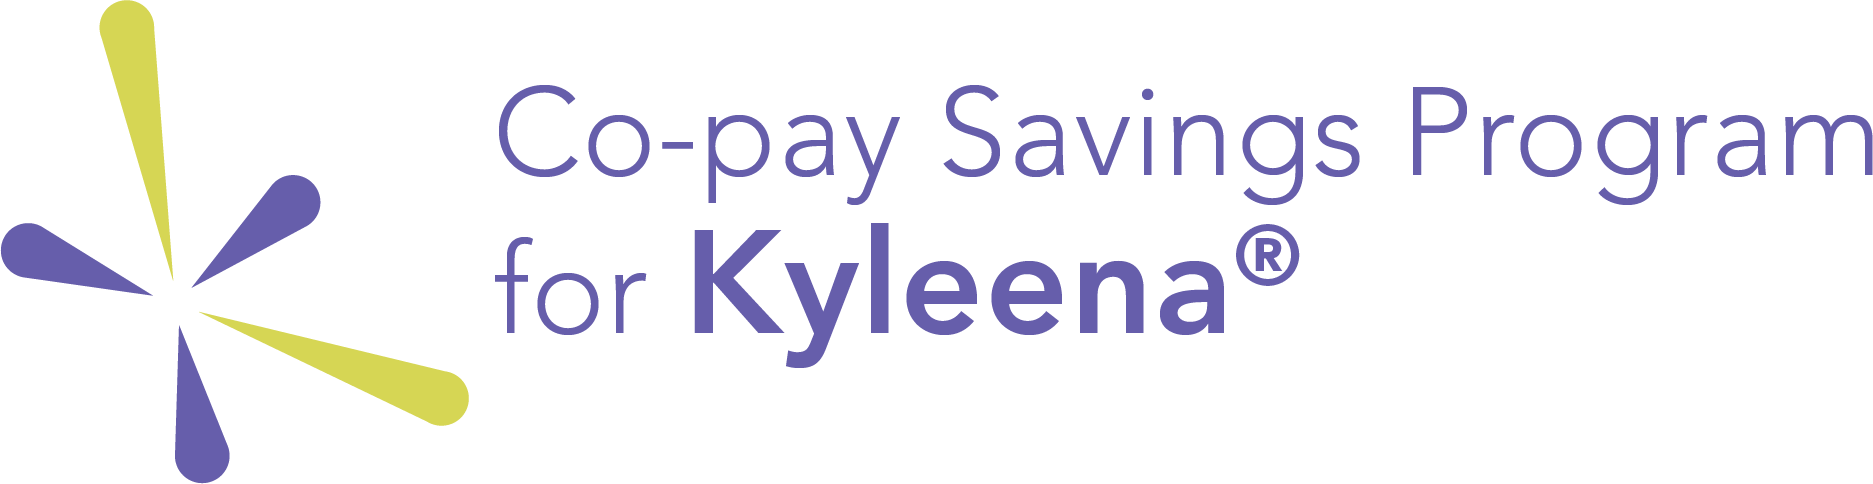 Kyleena copay program logo